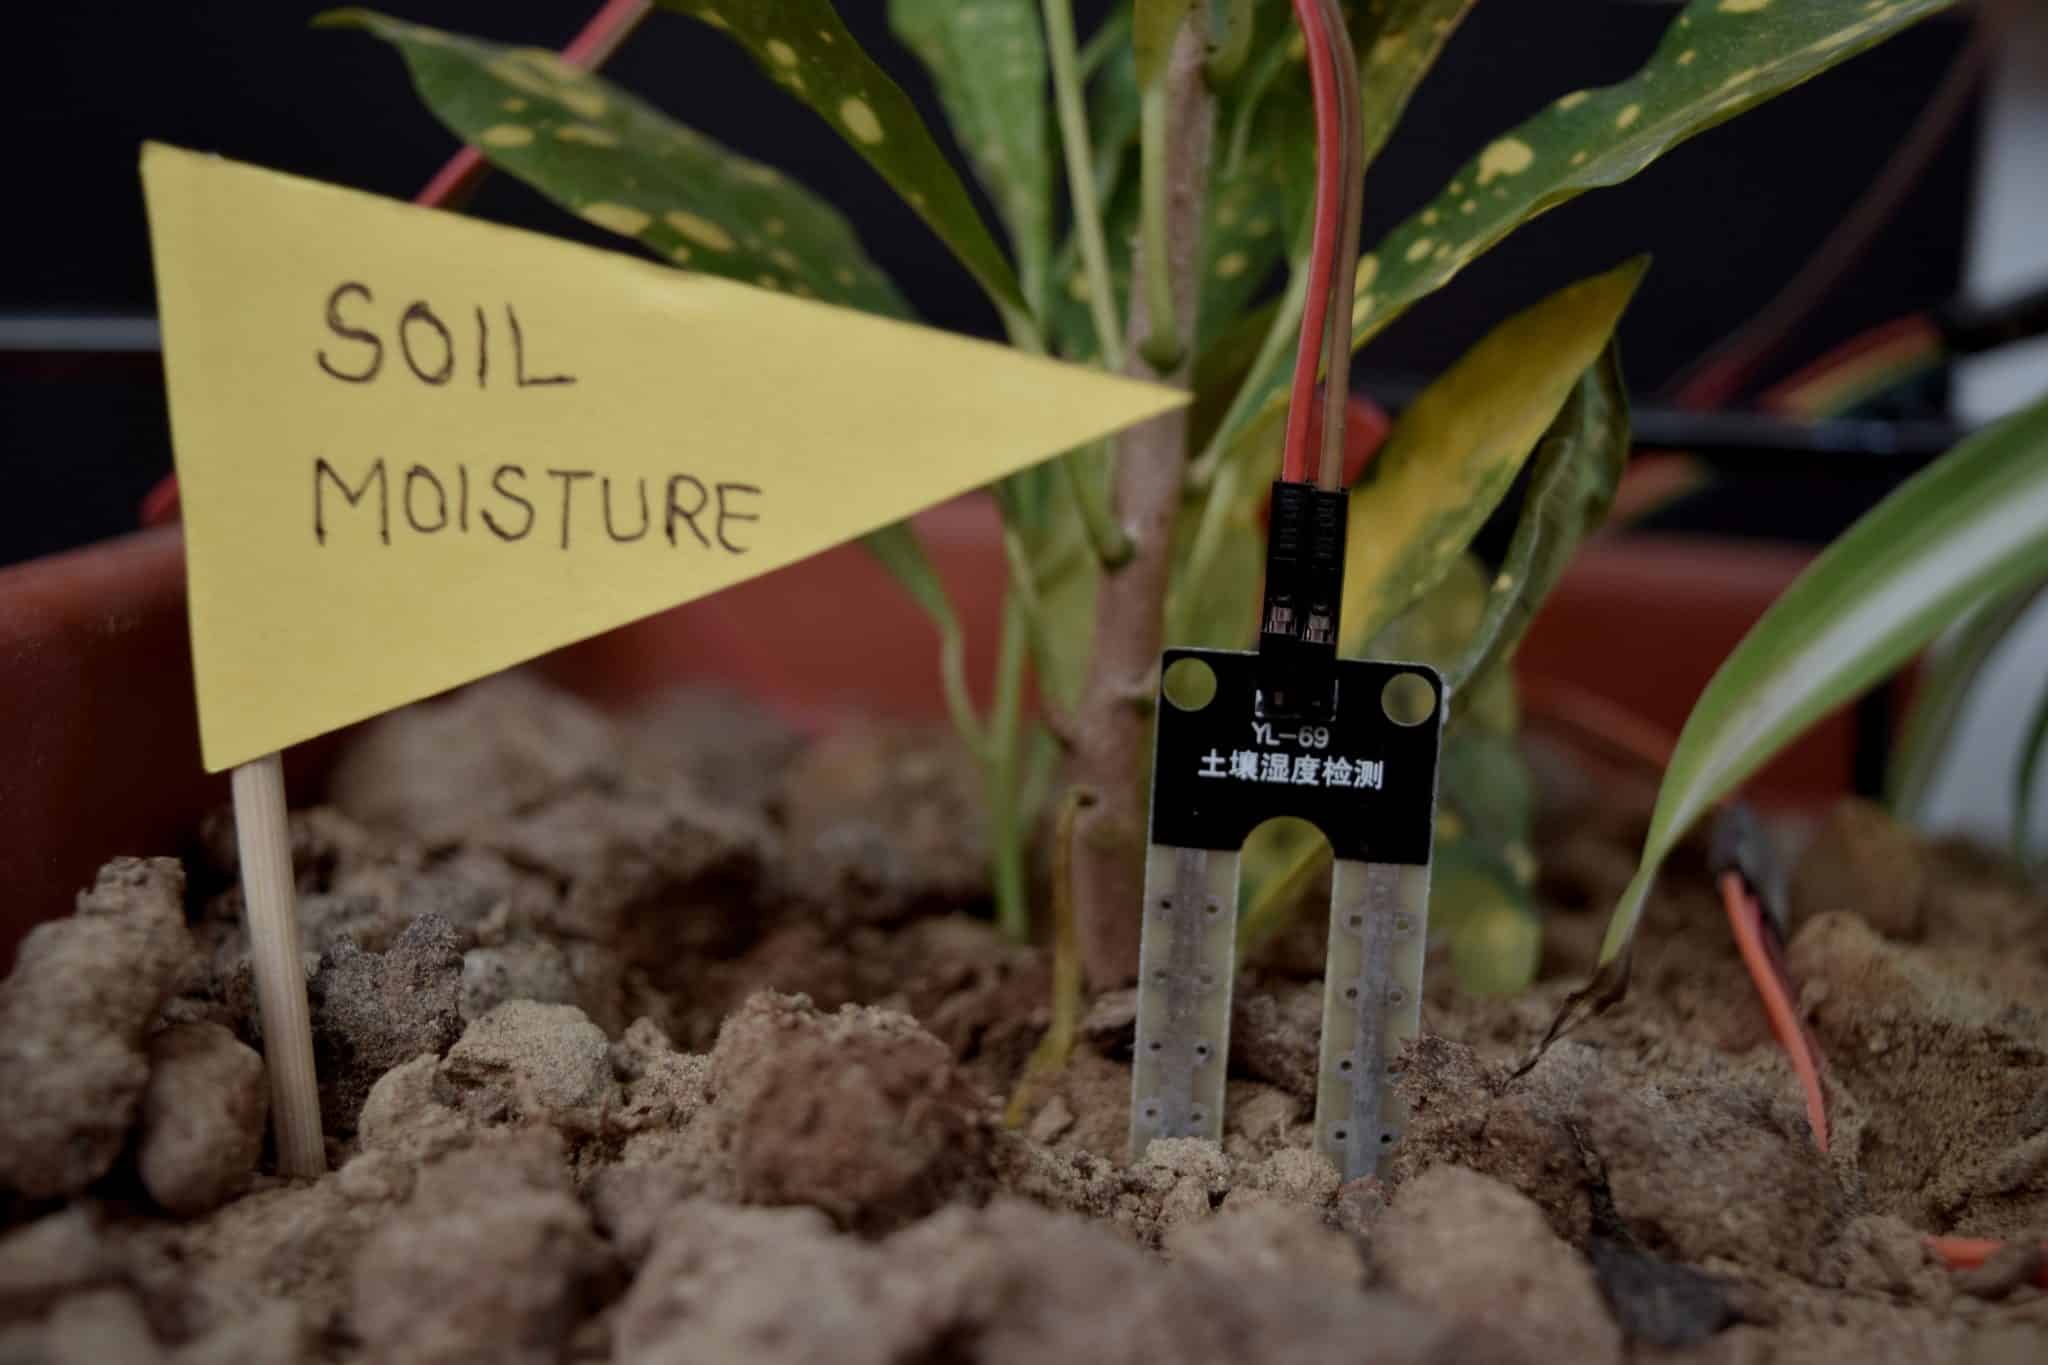 Professioanl Soil Moisture Meter Plants Moisture Meter Plant Water